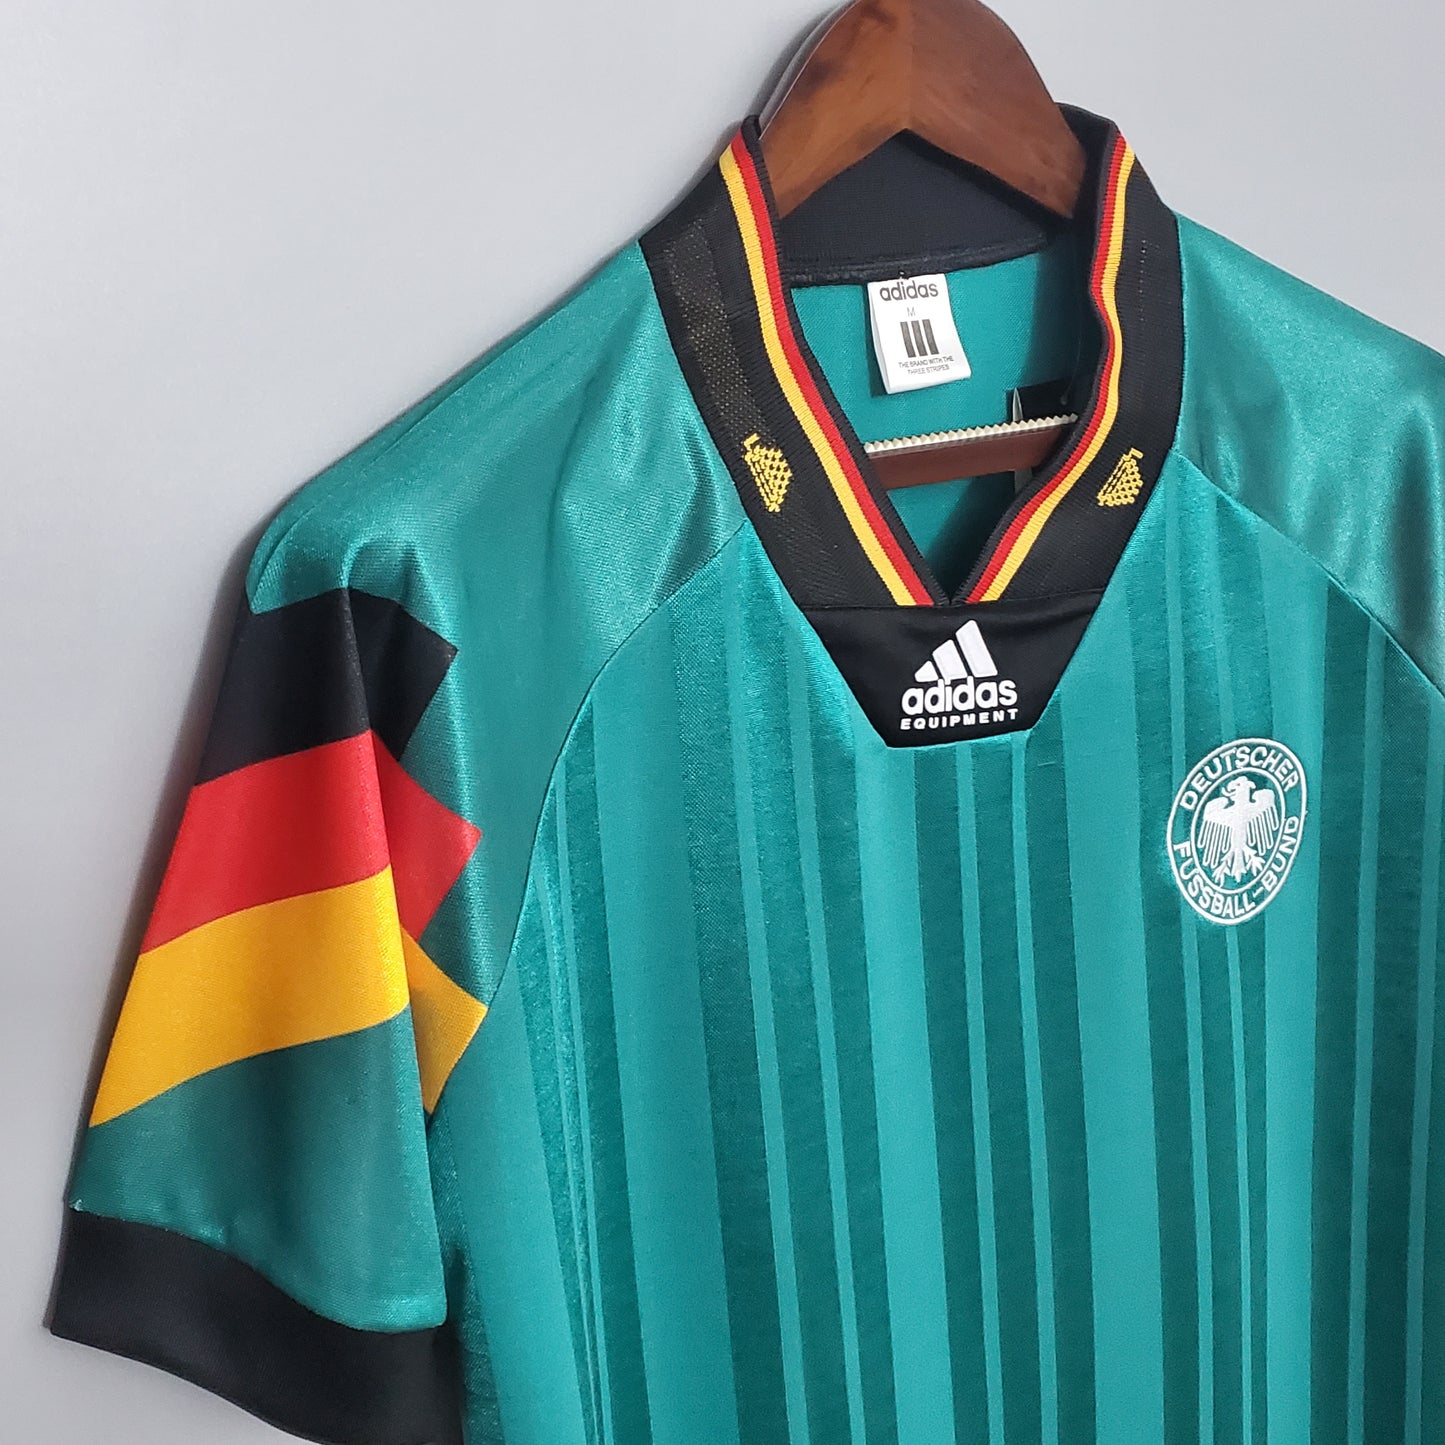 Germany 1992 Away Jersey